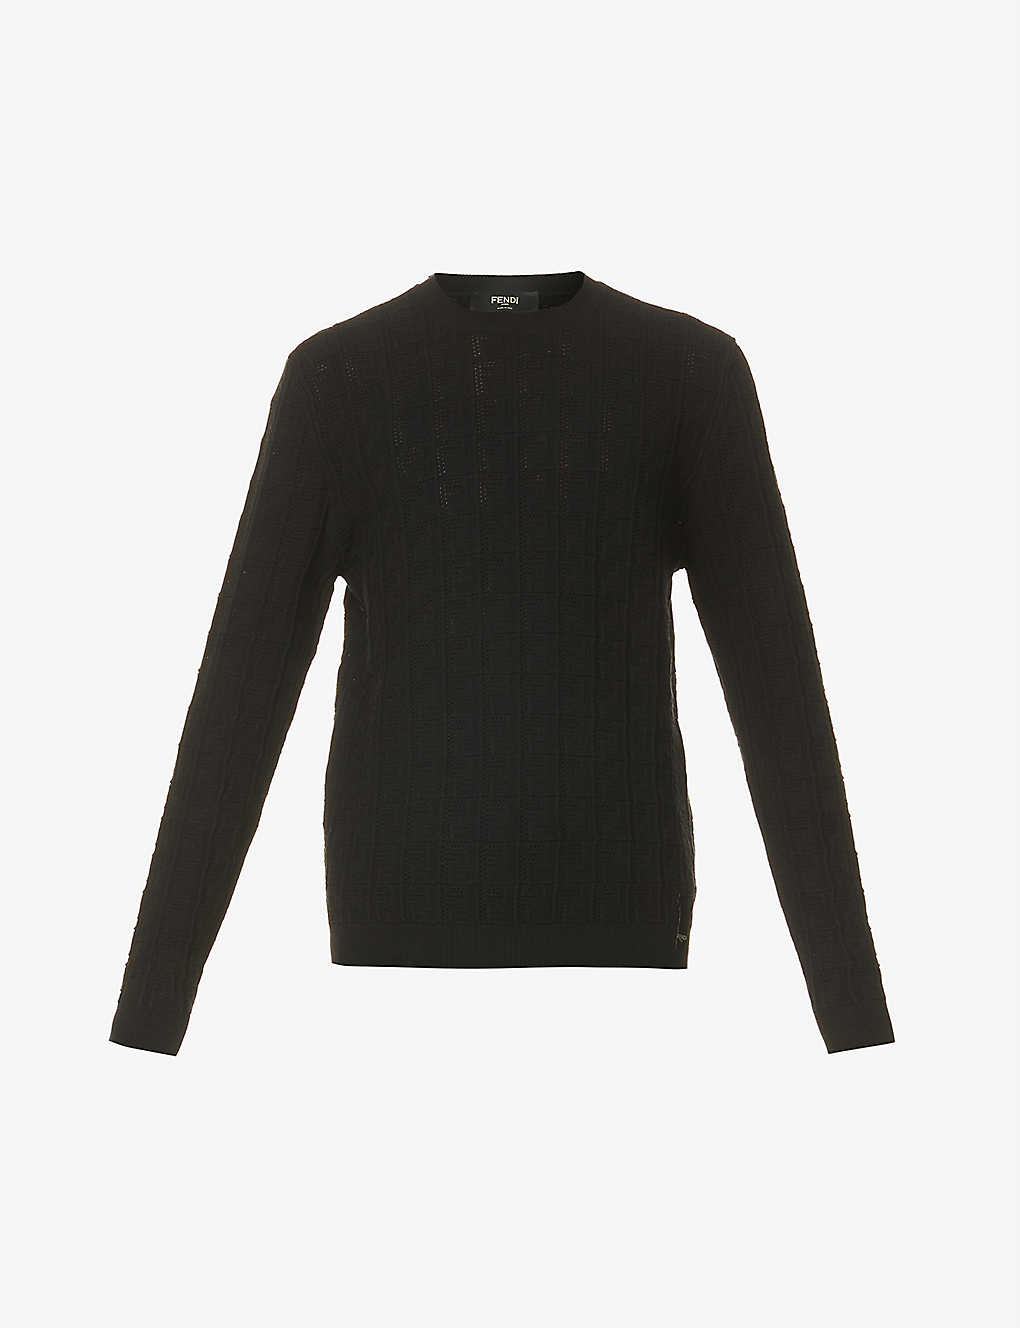 Brand-tab slim-fit knitted jumper(9179923)